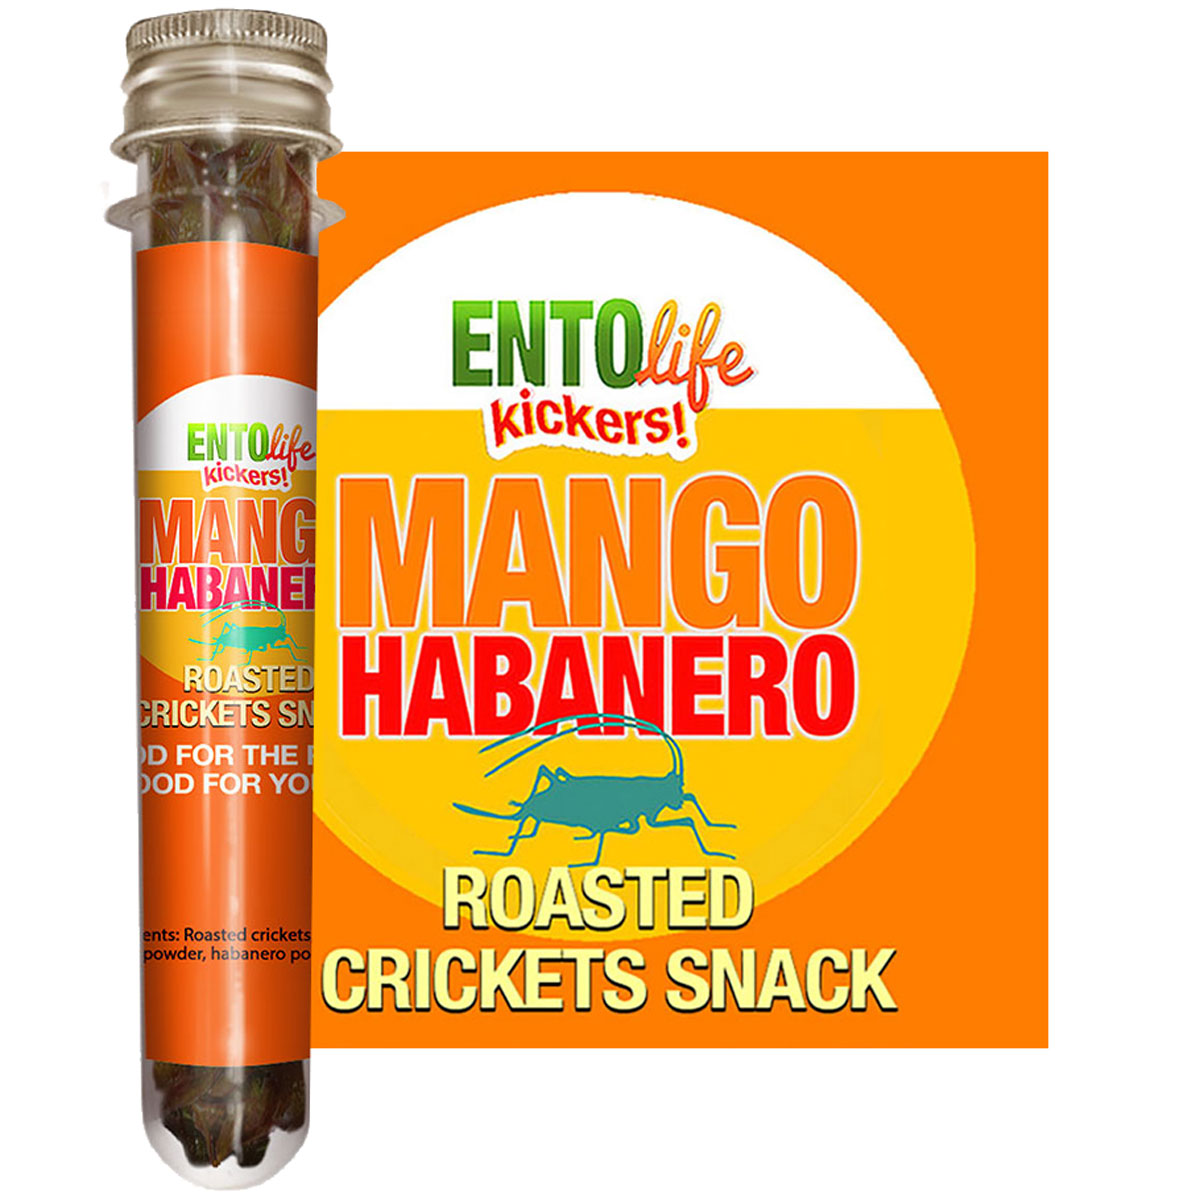 Mango Habanero Flavored Crickets